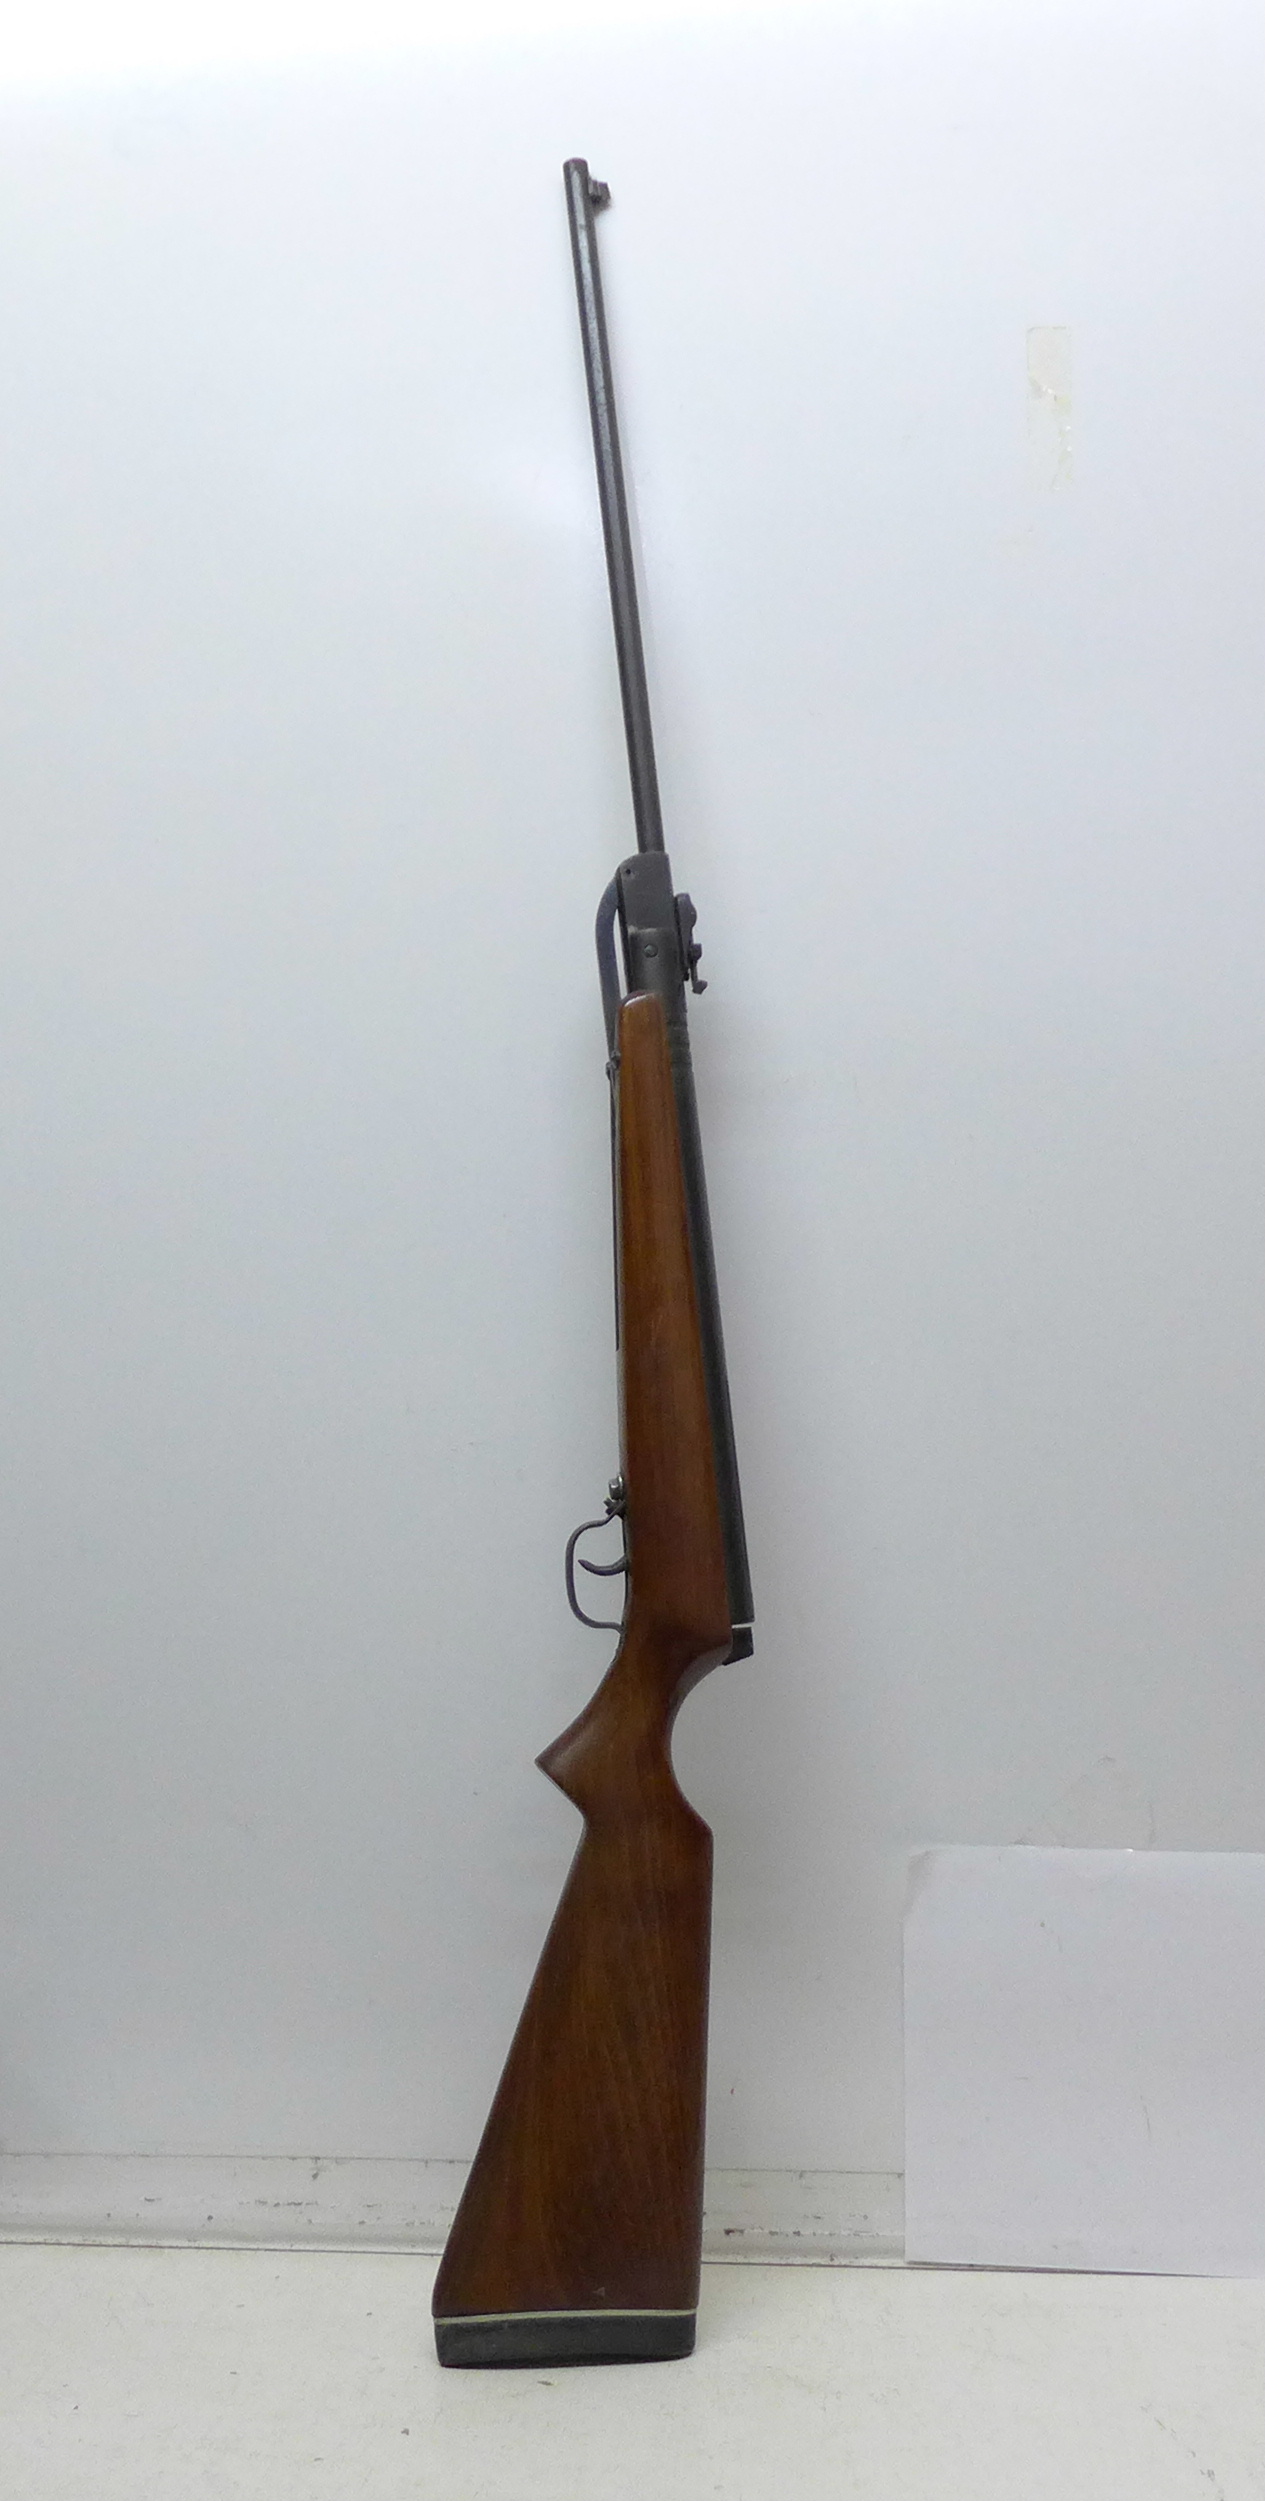 A Haenel East German air rifle, model no. 303, a/f